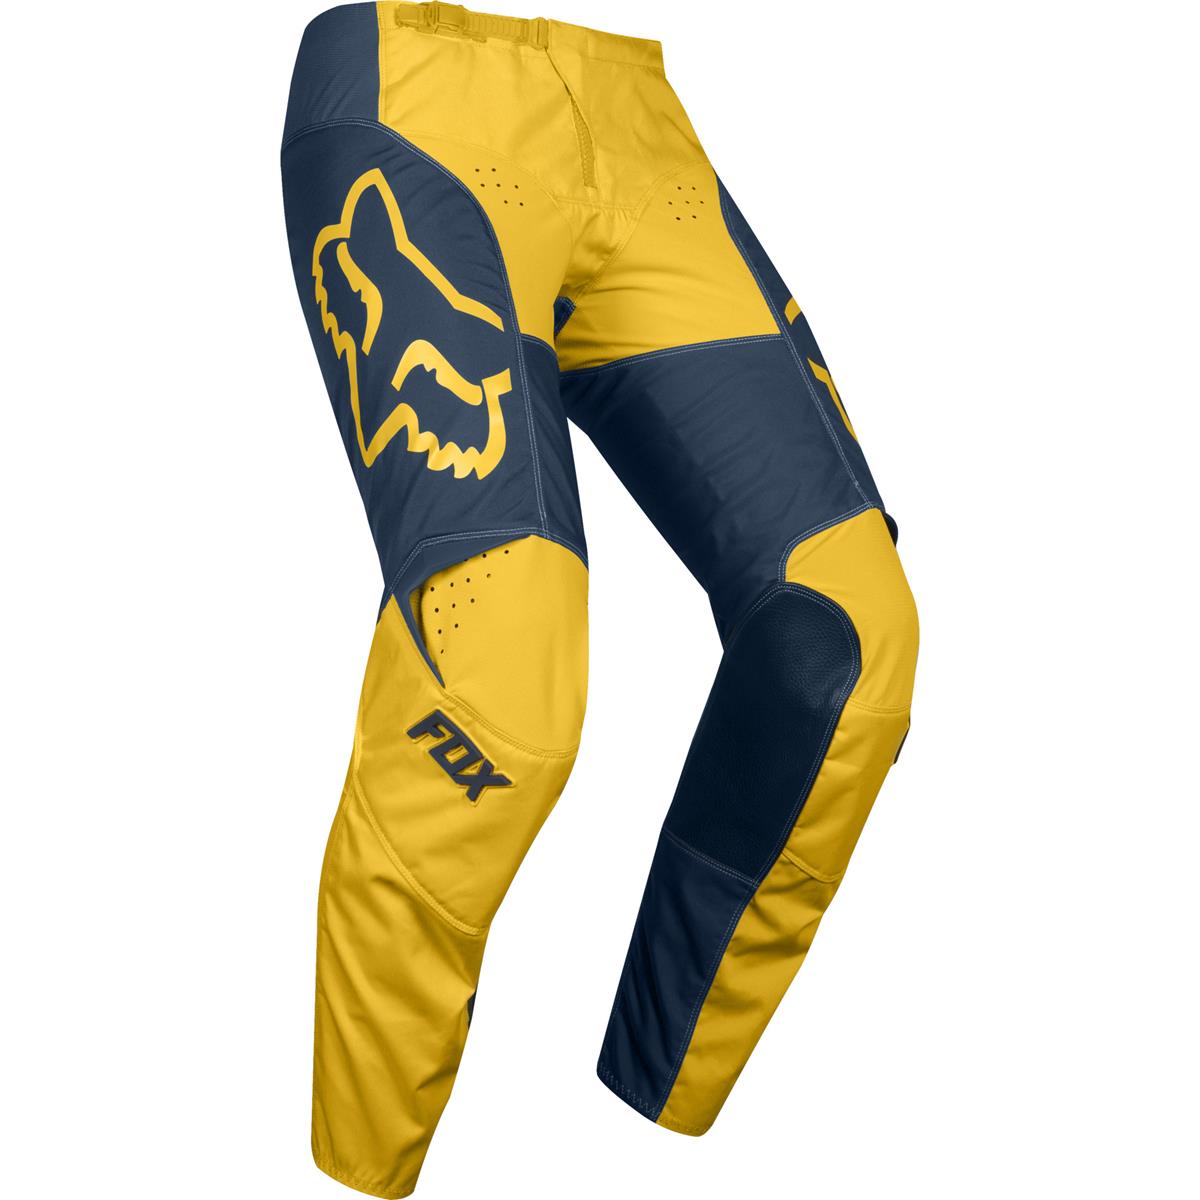 Fox Racing 2019 180 PRZM Jersey and Pants Combo Offroad Gear Set Adult Mens Navy/Yellow Medium Jersey/Pants 30W 